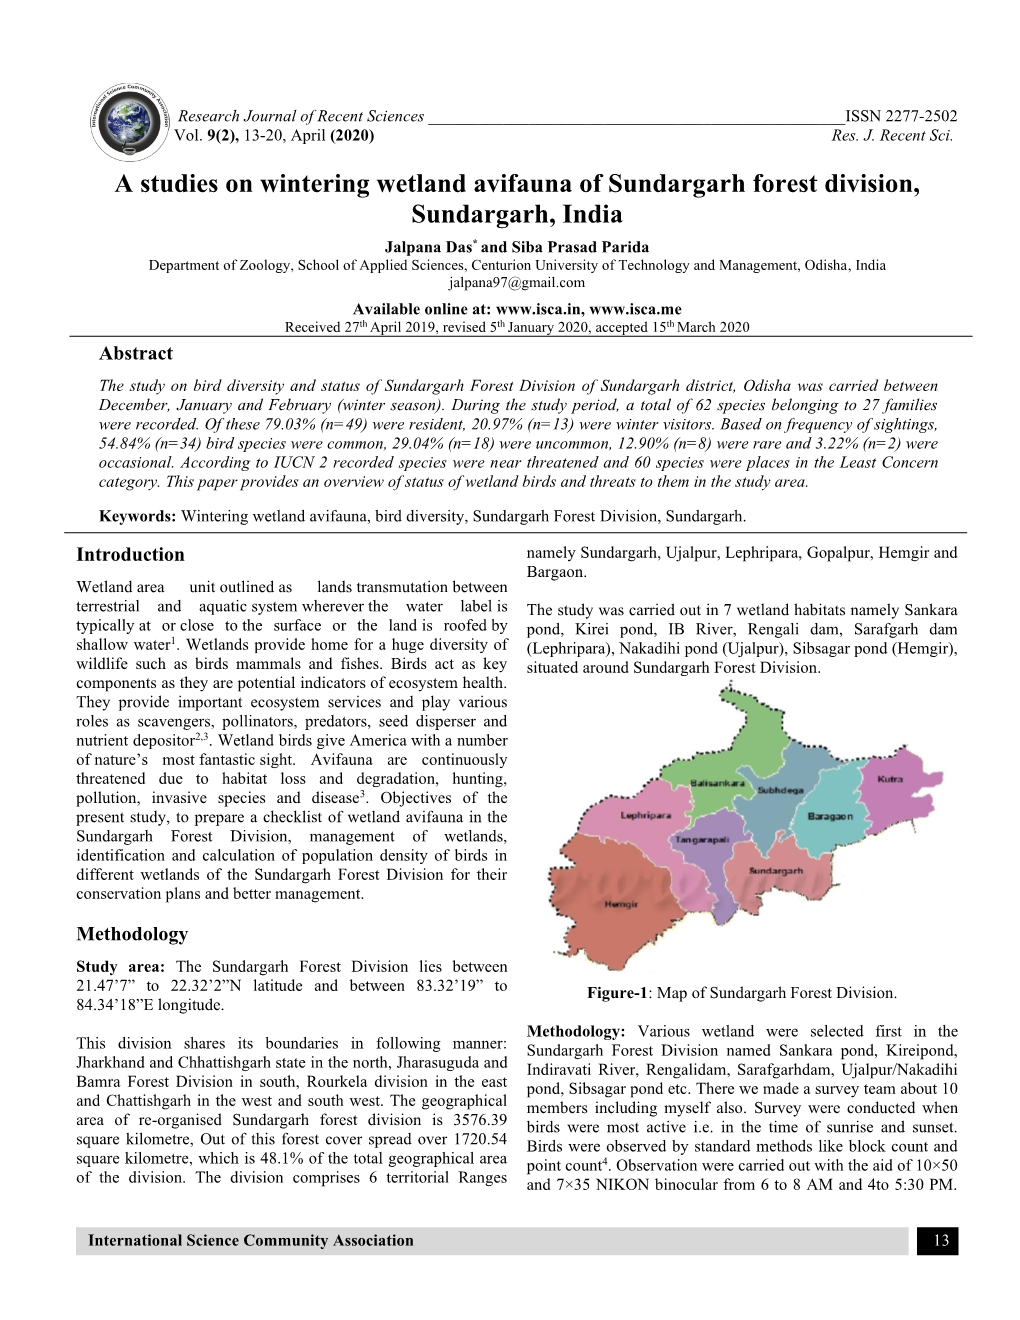 A Studies on Wintering Wetland Avifauna of Sundargarh Forest Division, Sundargarh, India